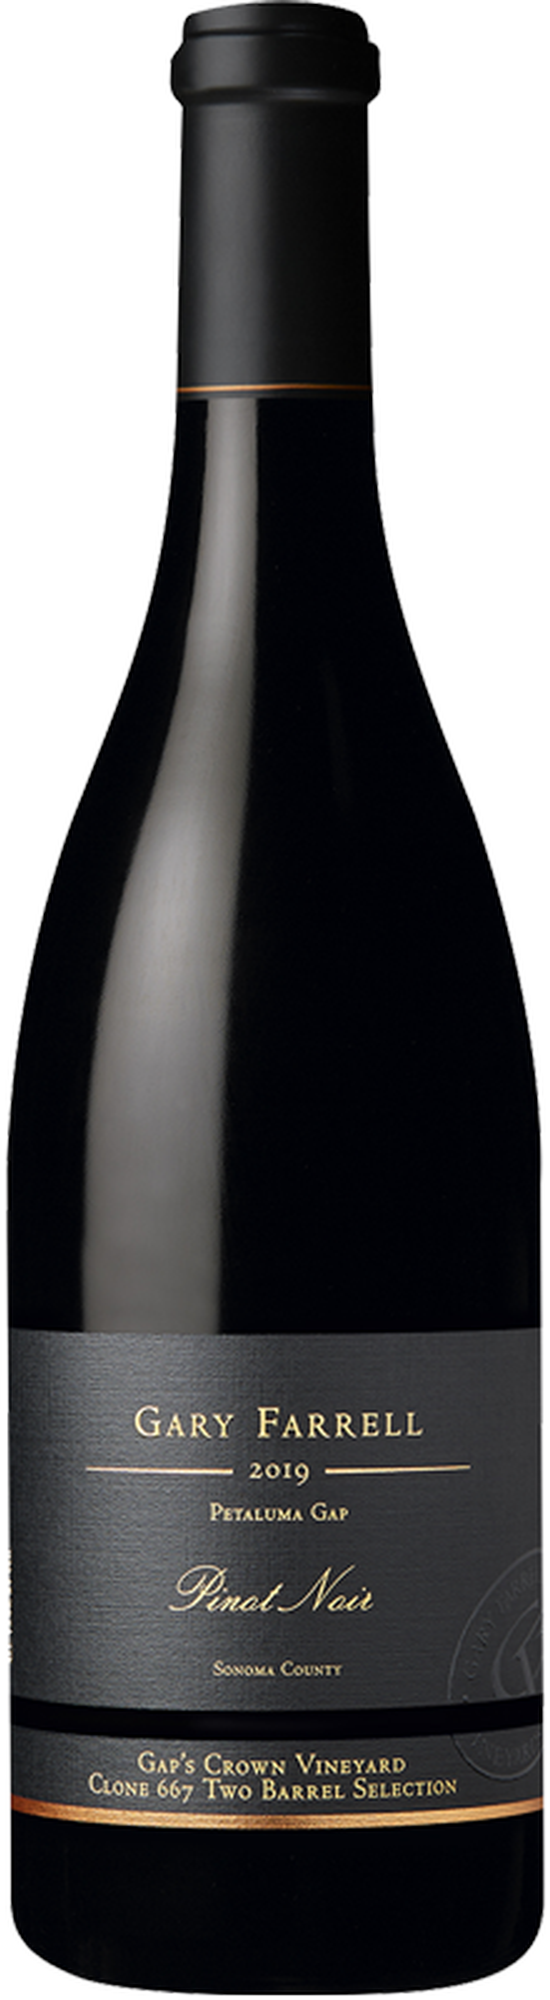 2019 Gap's Crown Vineyard Clone 667 Two Barrel Selection Pinot Noir